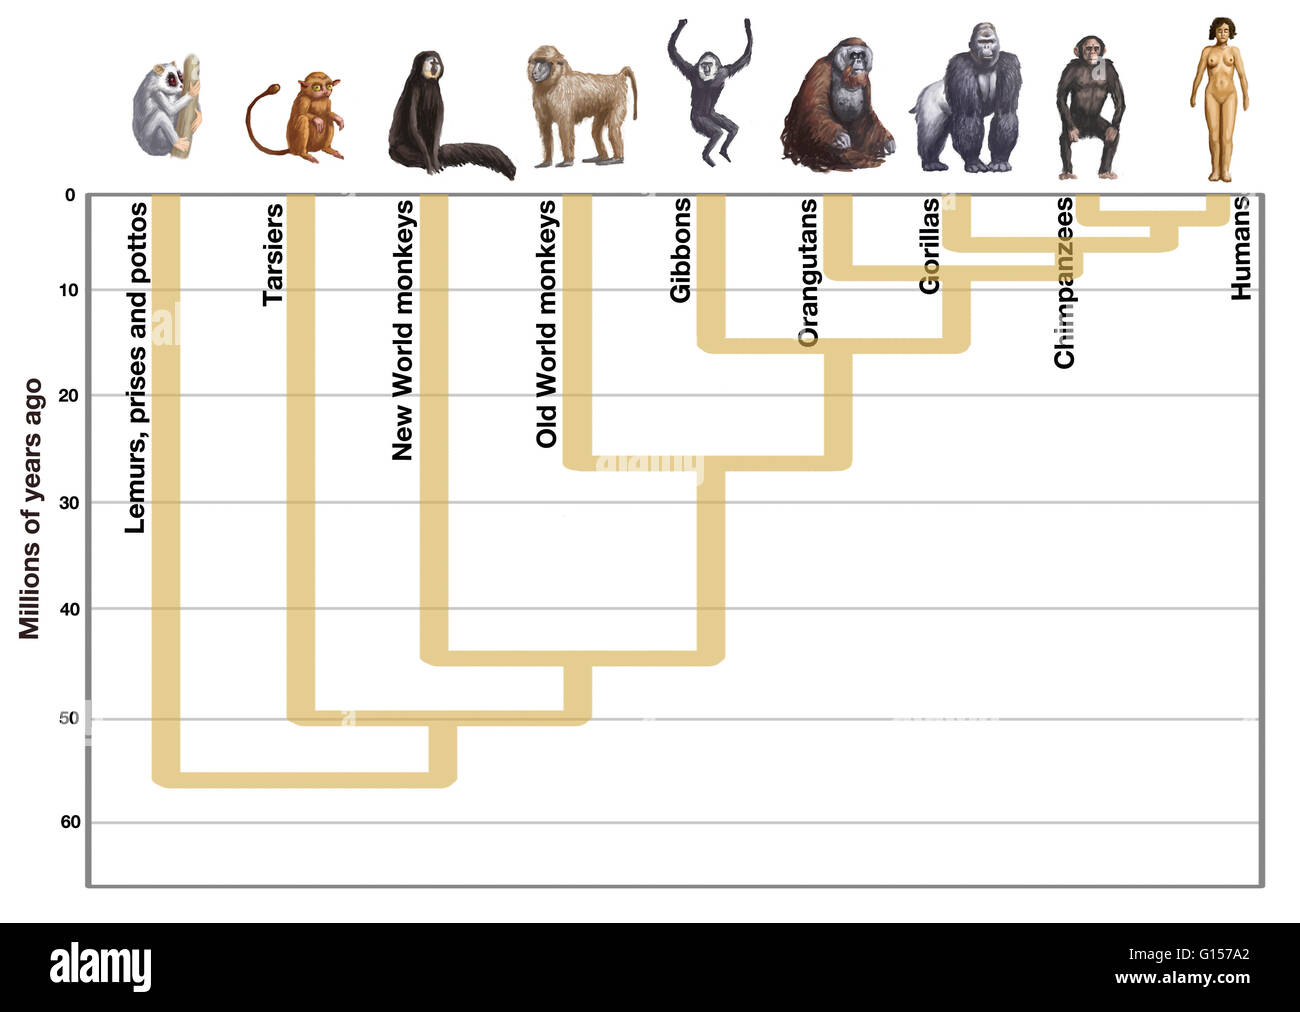 Human Evolution Timeline Download Scientific Diagram - vrogue.co